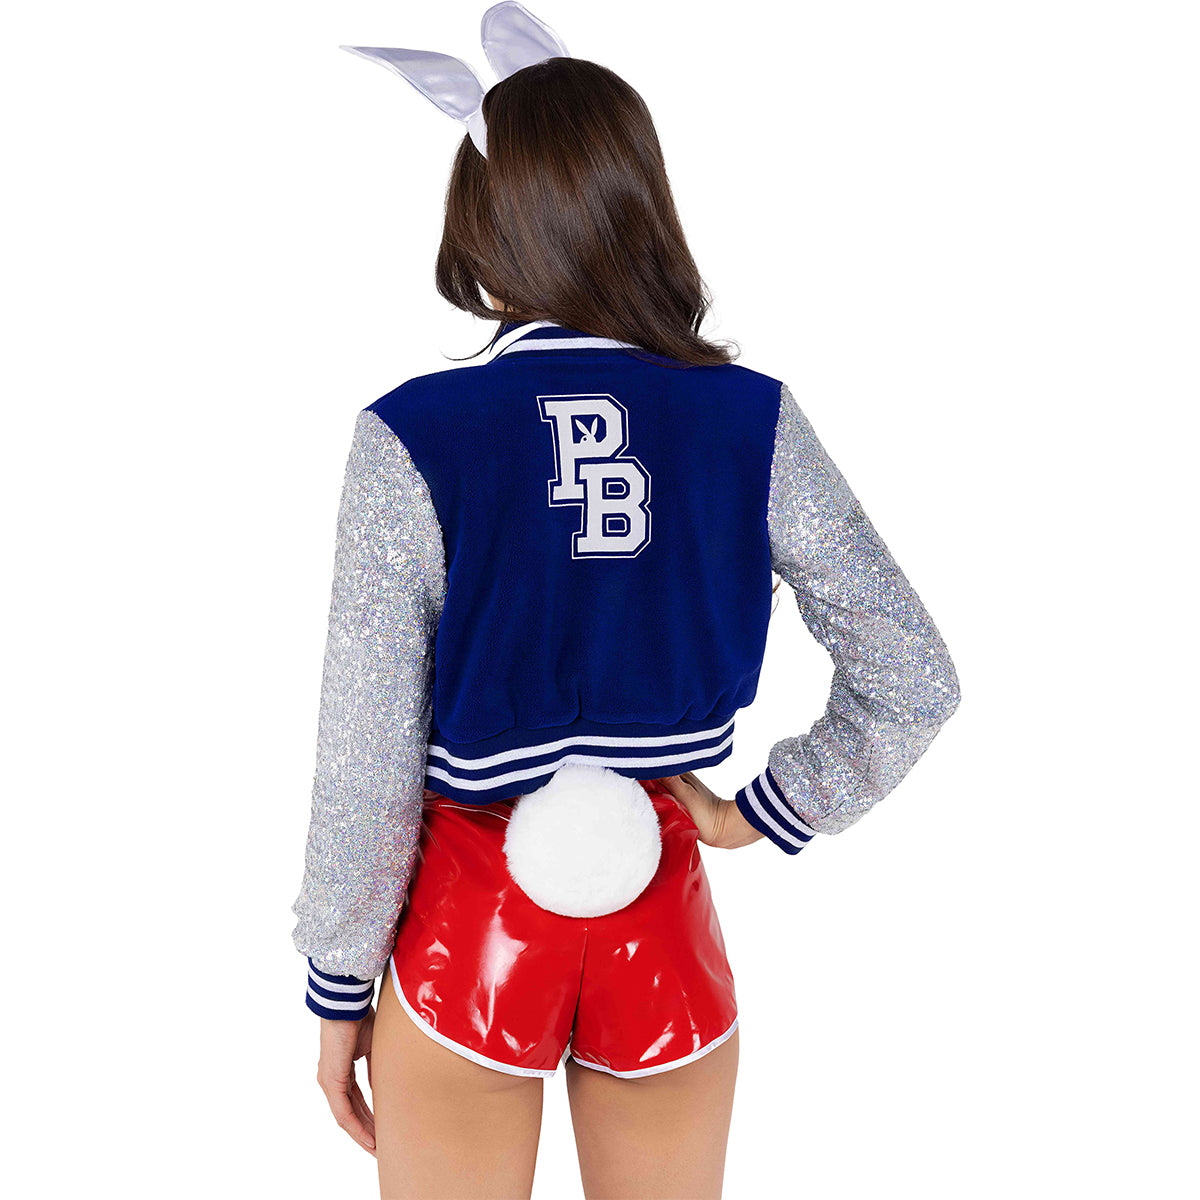 6pc Playboy Athlete Costume